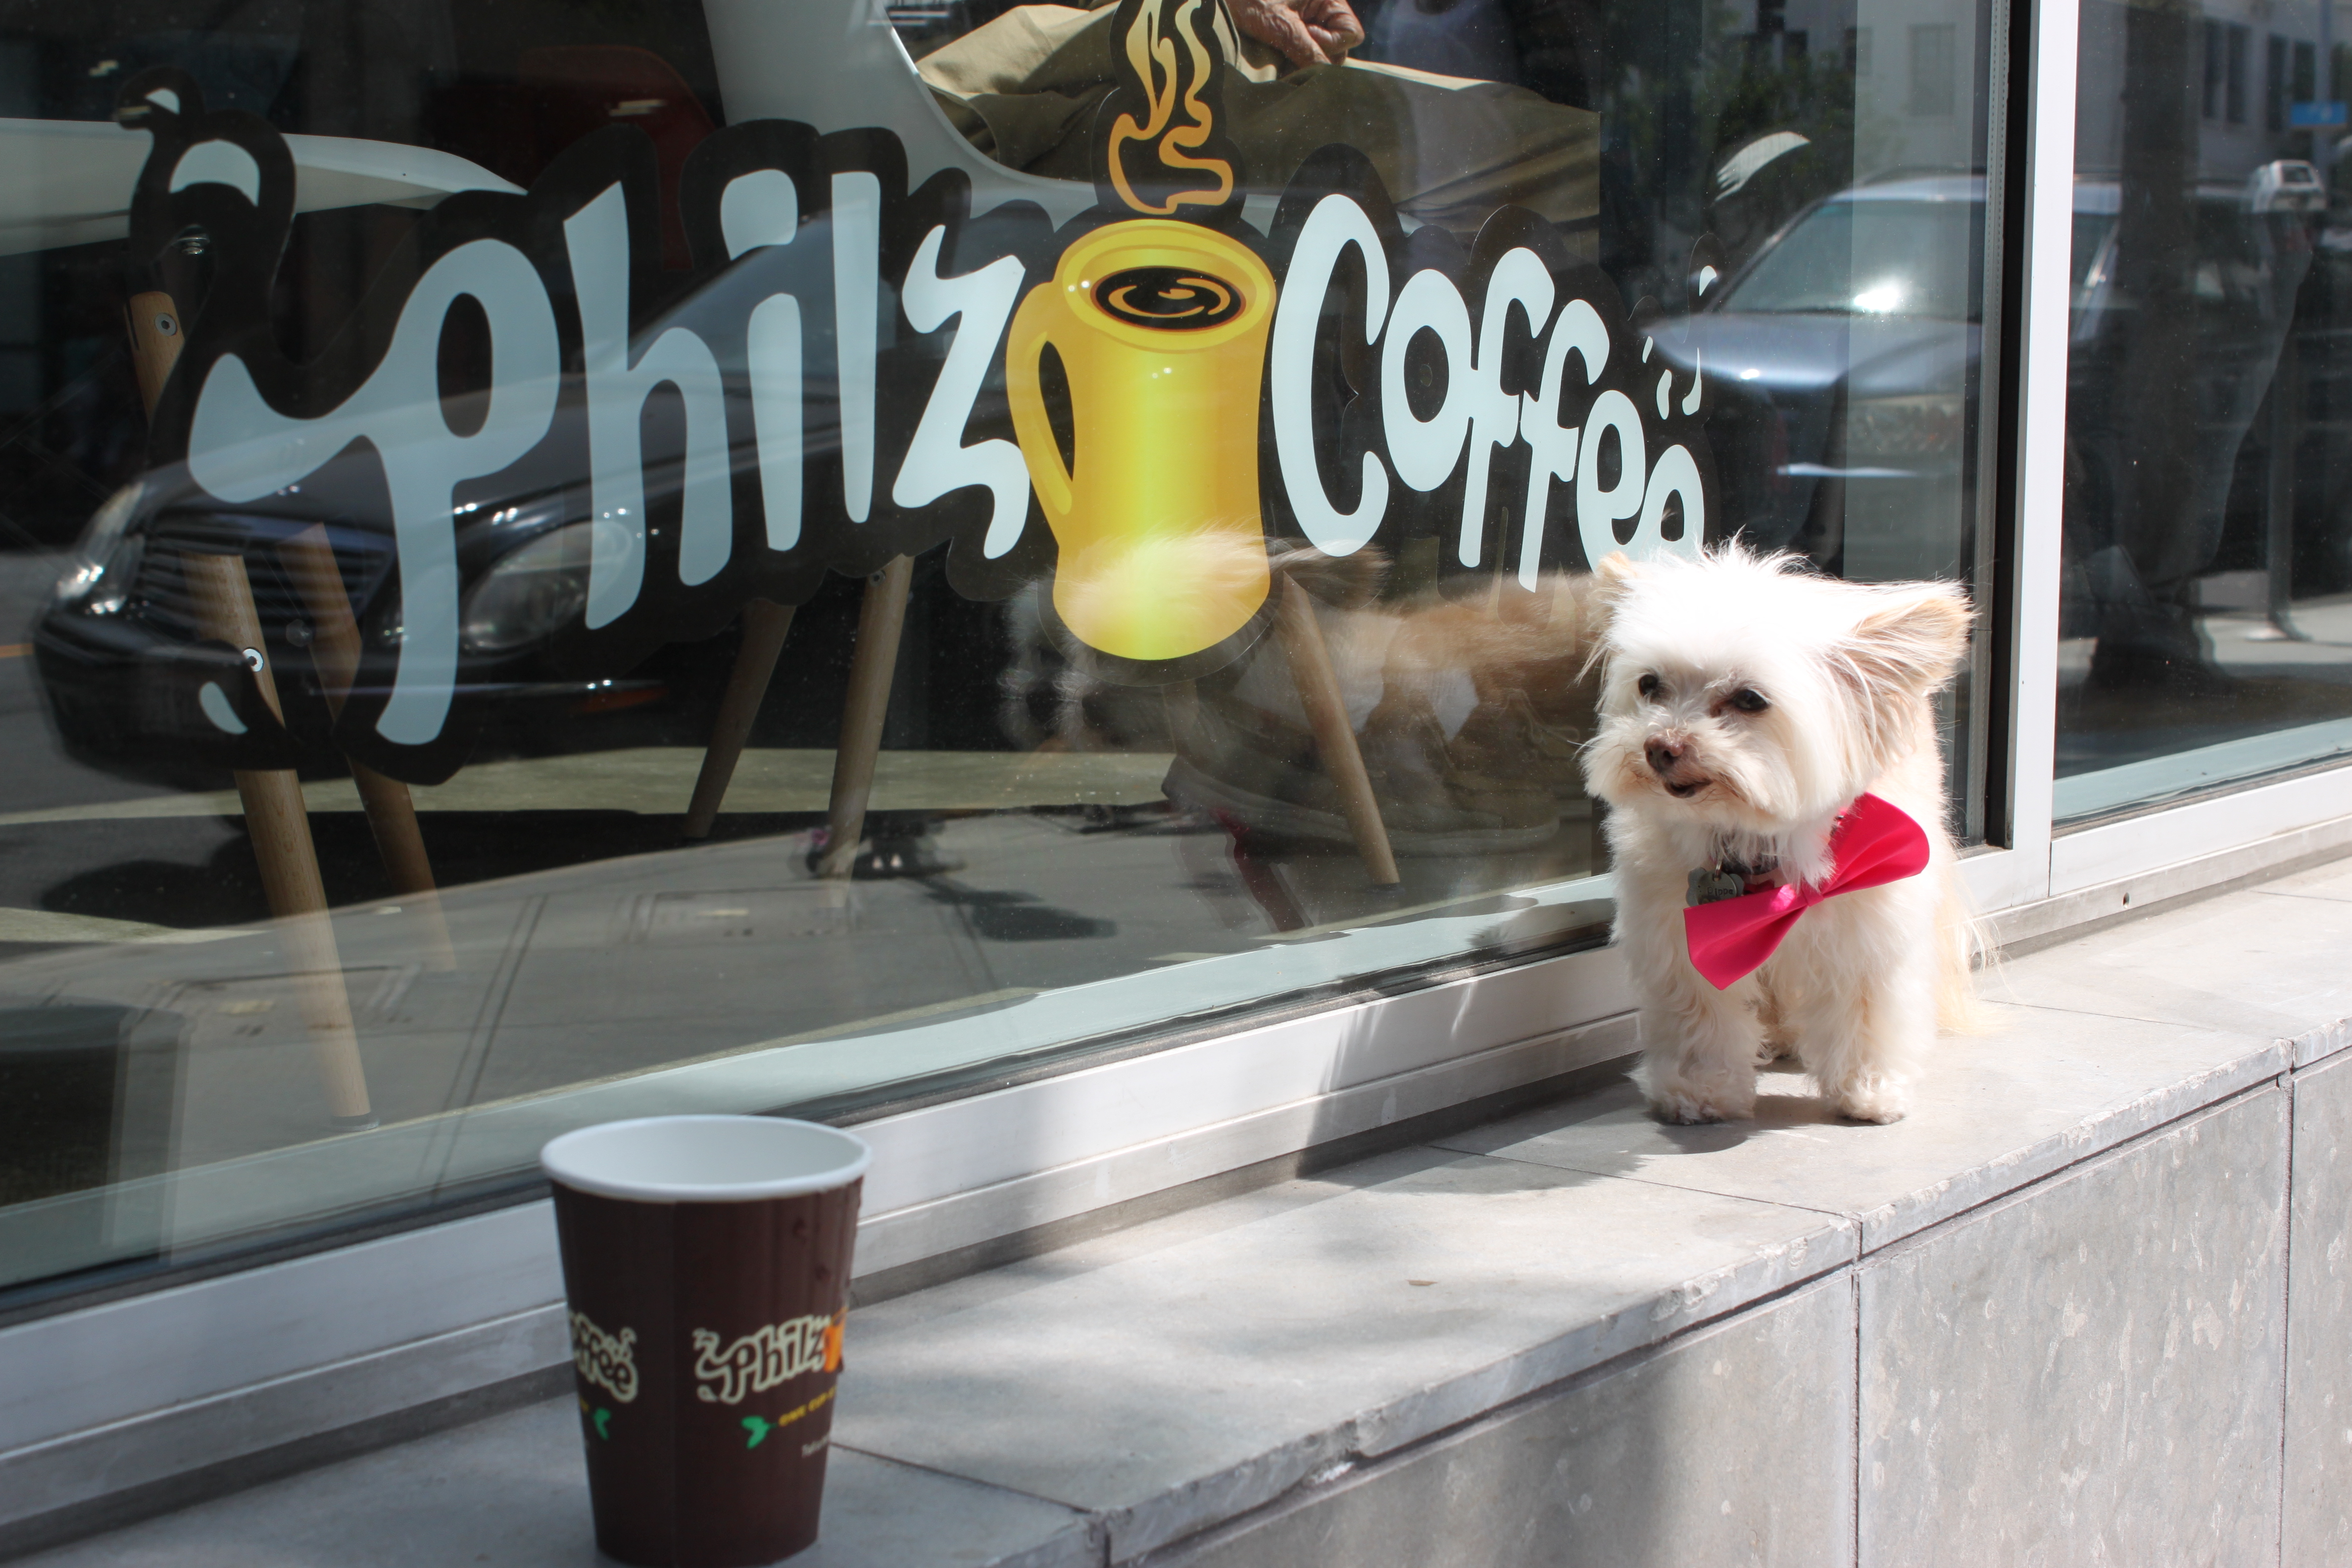 Philz Coffee Santa Monica (310)451-9500